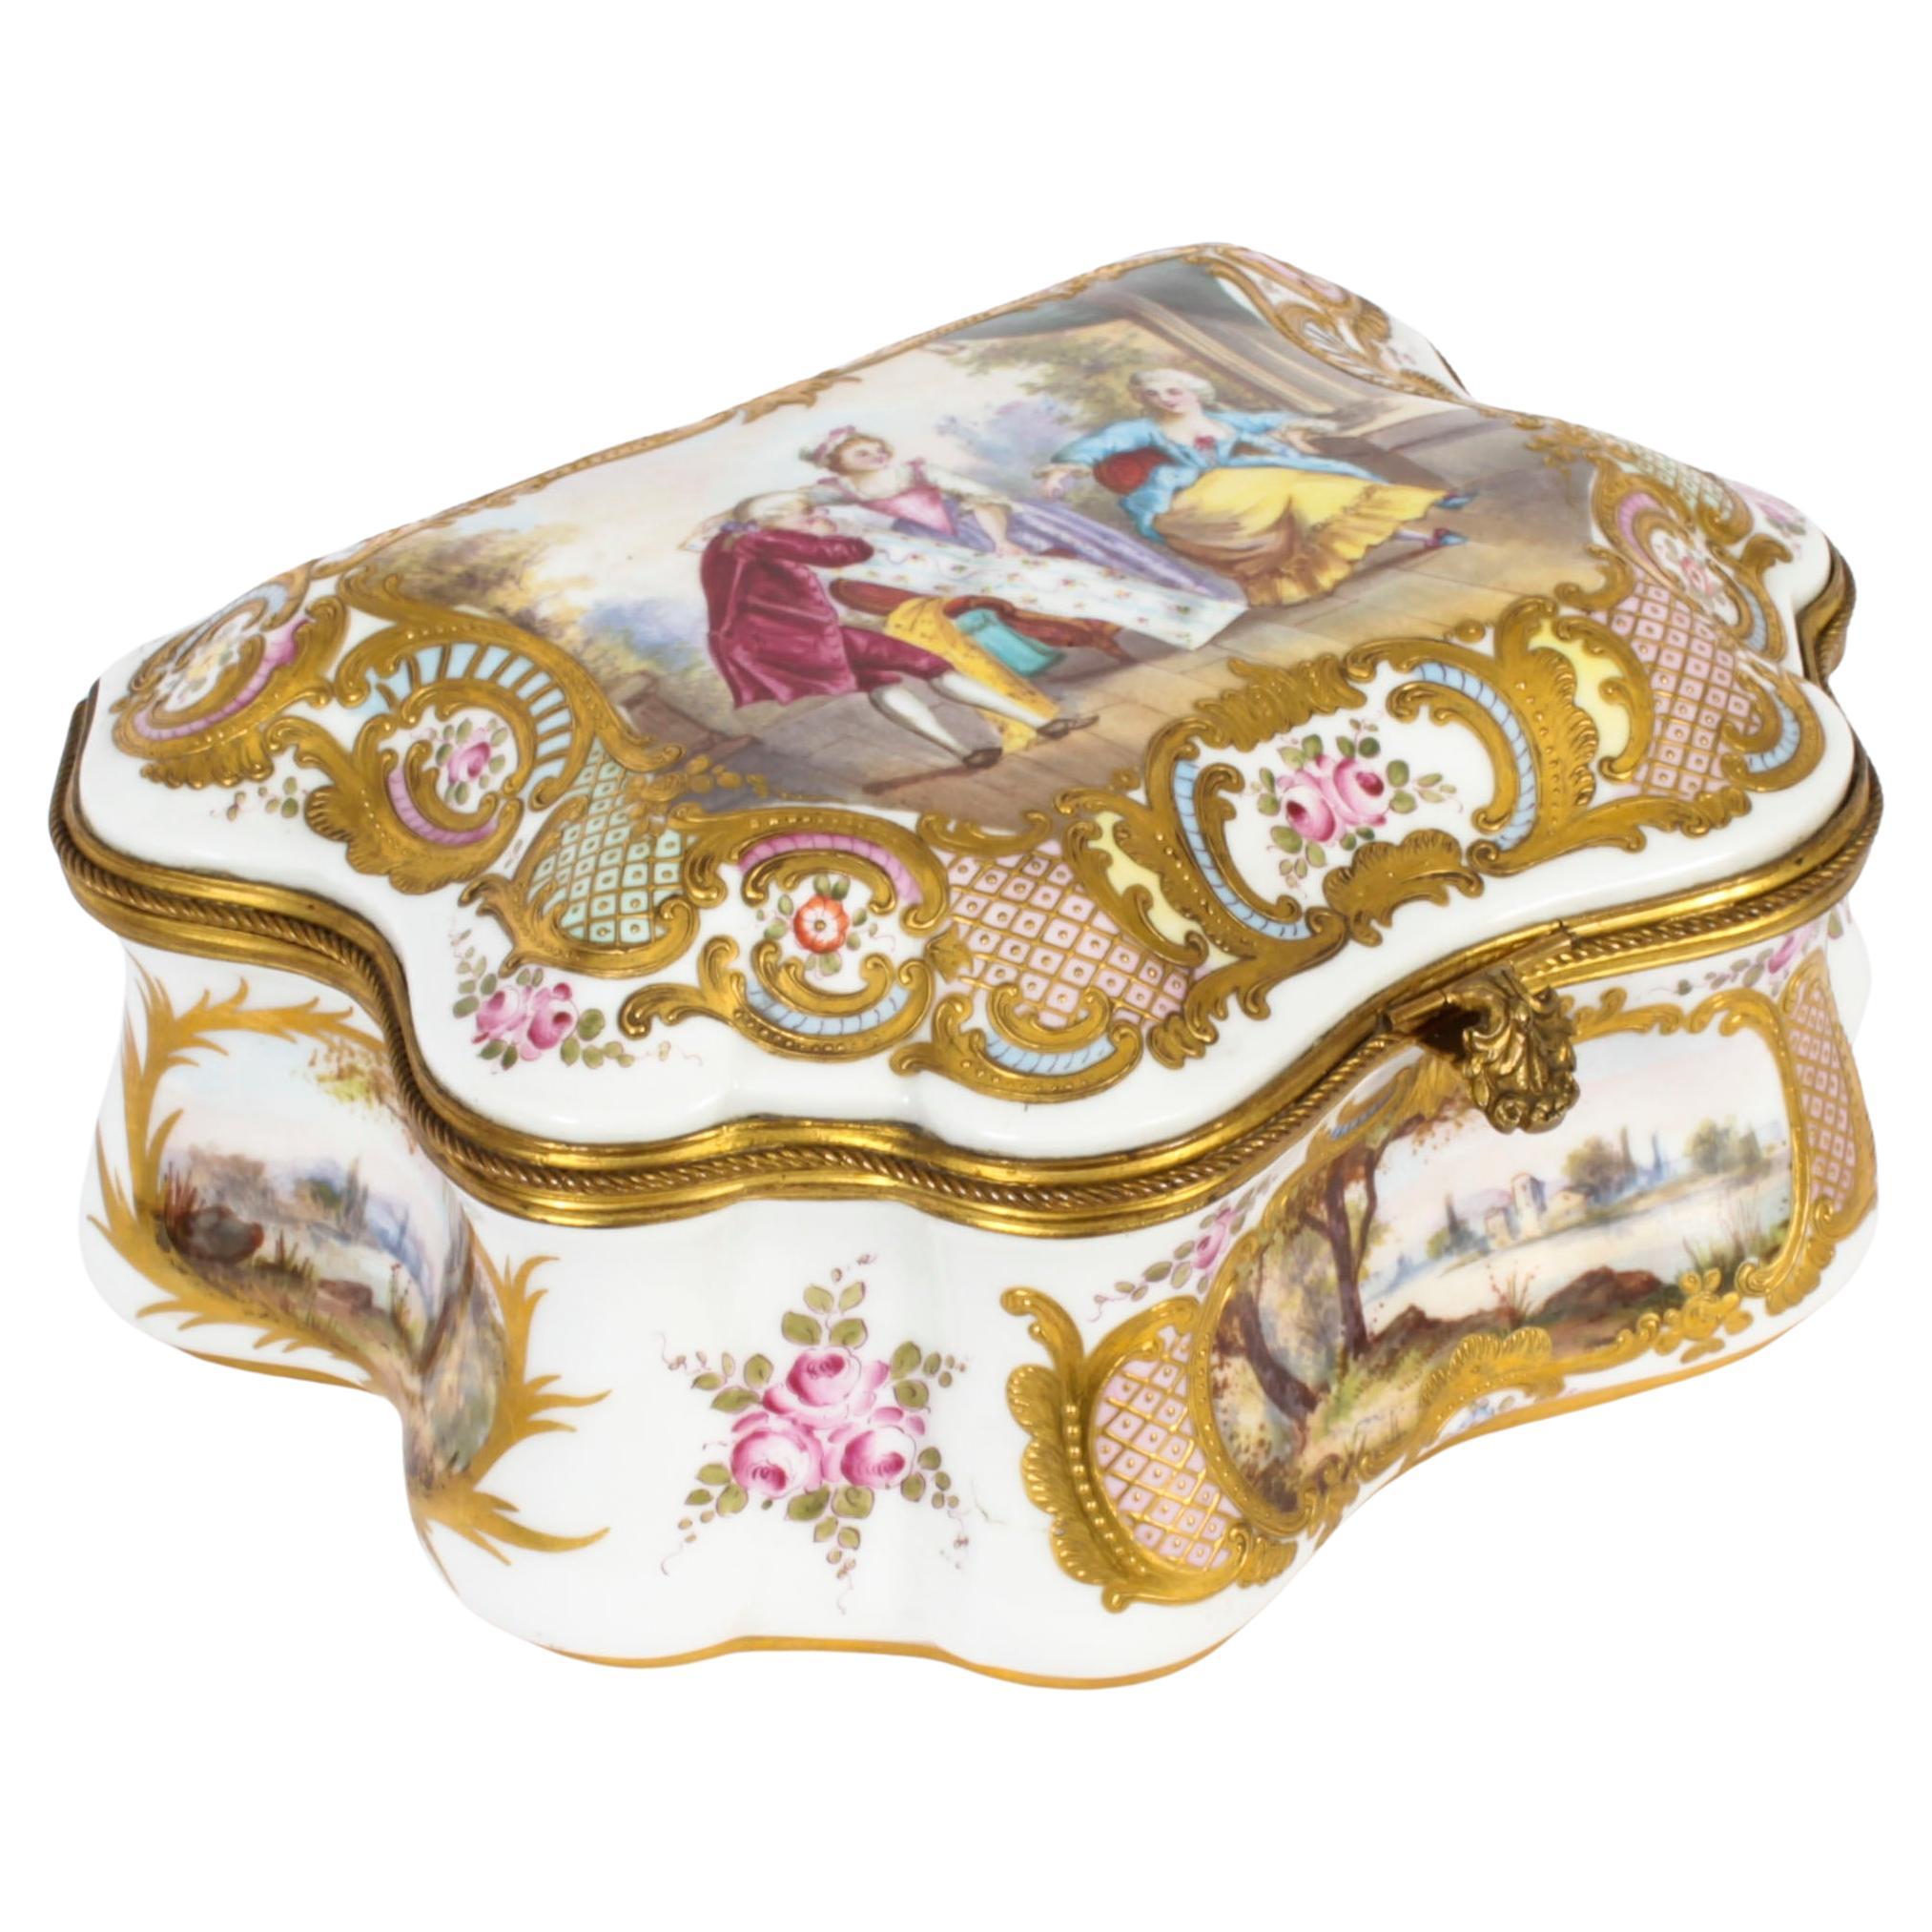 Antique Large French Sevres Porcelain Casket 19th Century